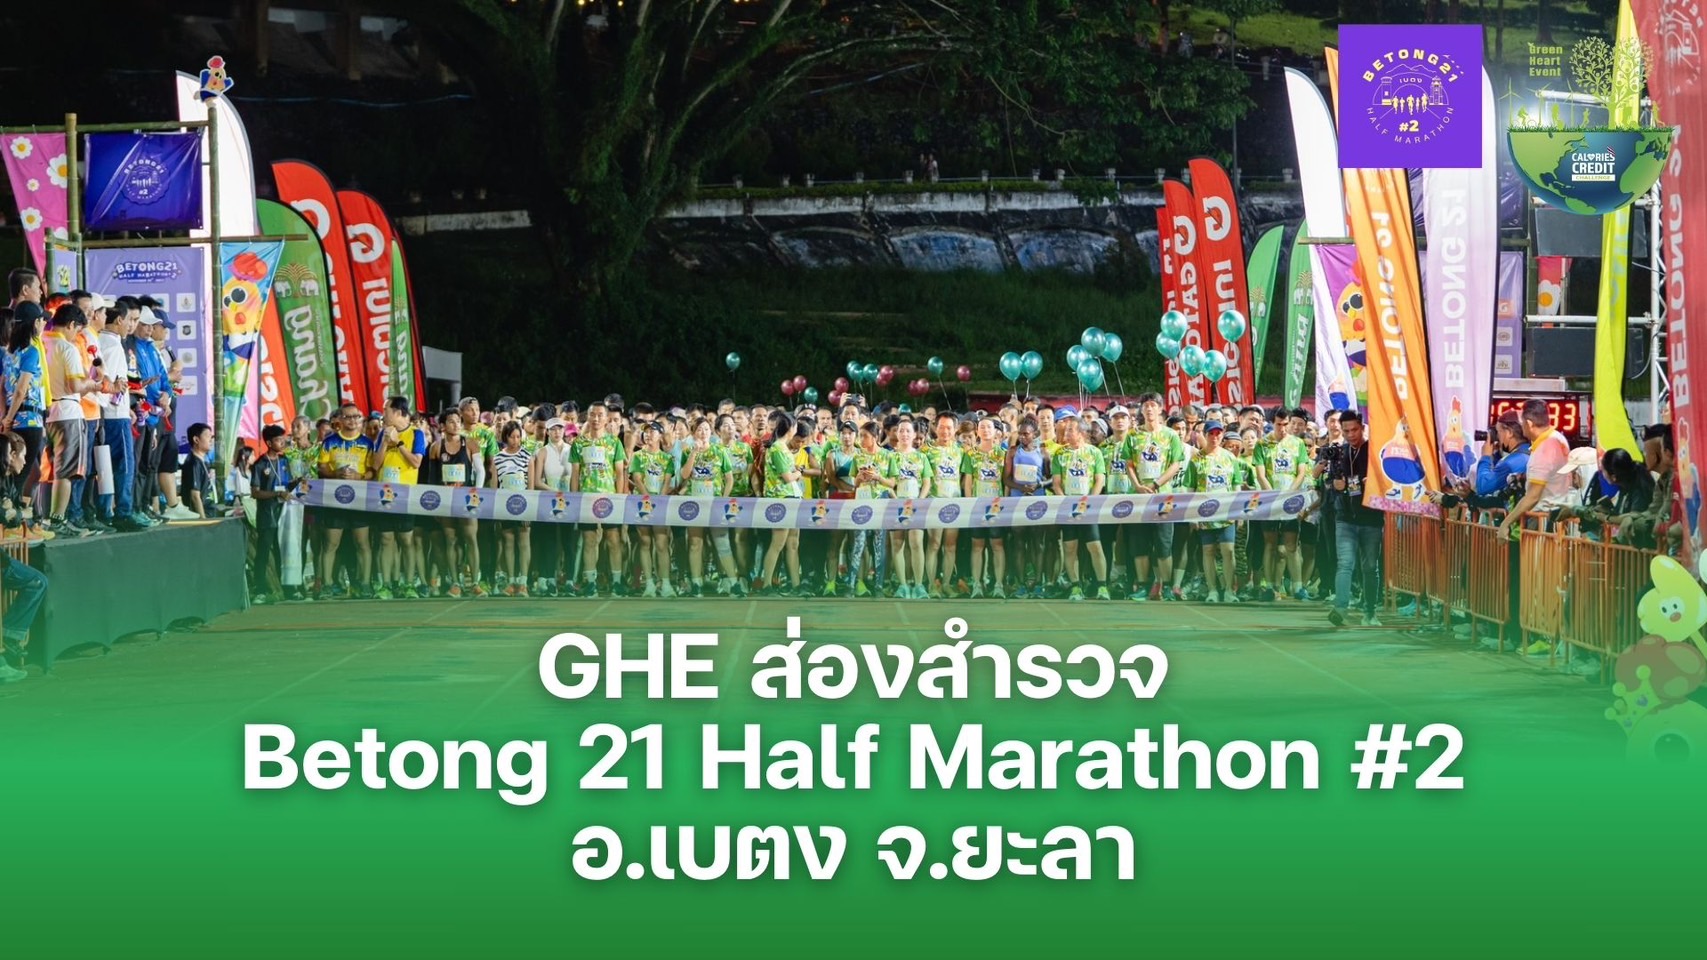 GHE ส่องสำรวจกิจกรรมวิ่ง Betong21 กิจกรรมท่องเที่ยวเชิงกีฬาเป็นมิตรสิ่งแวดล้อม